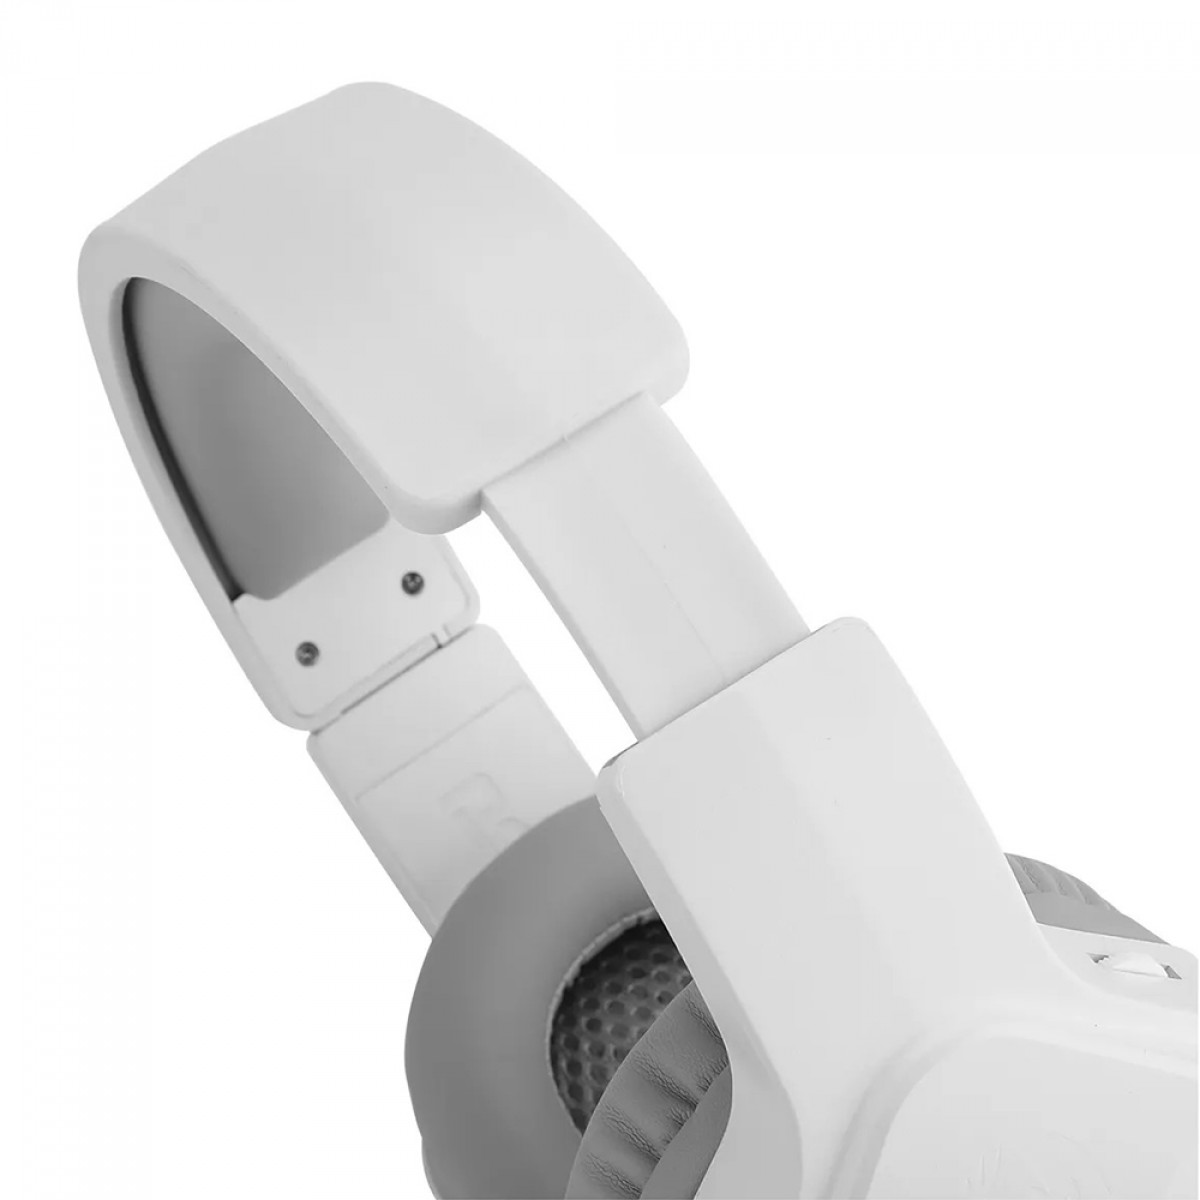 Headset Gamer Redragon Themis 2, P2, White, H220W-N